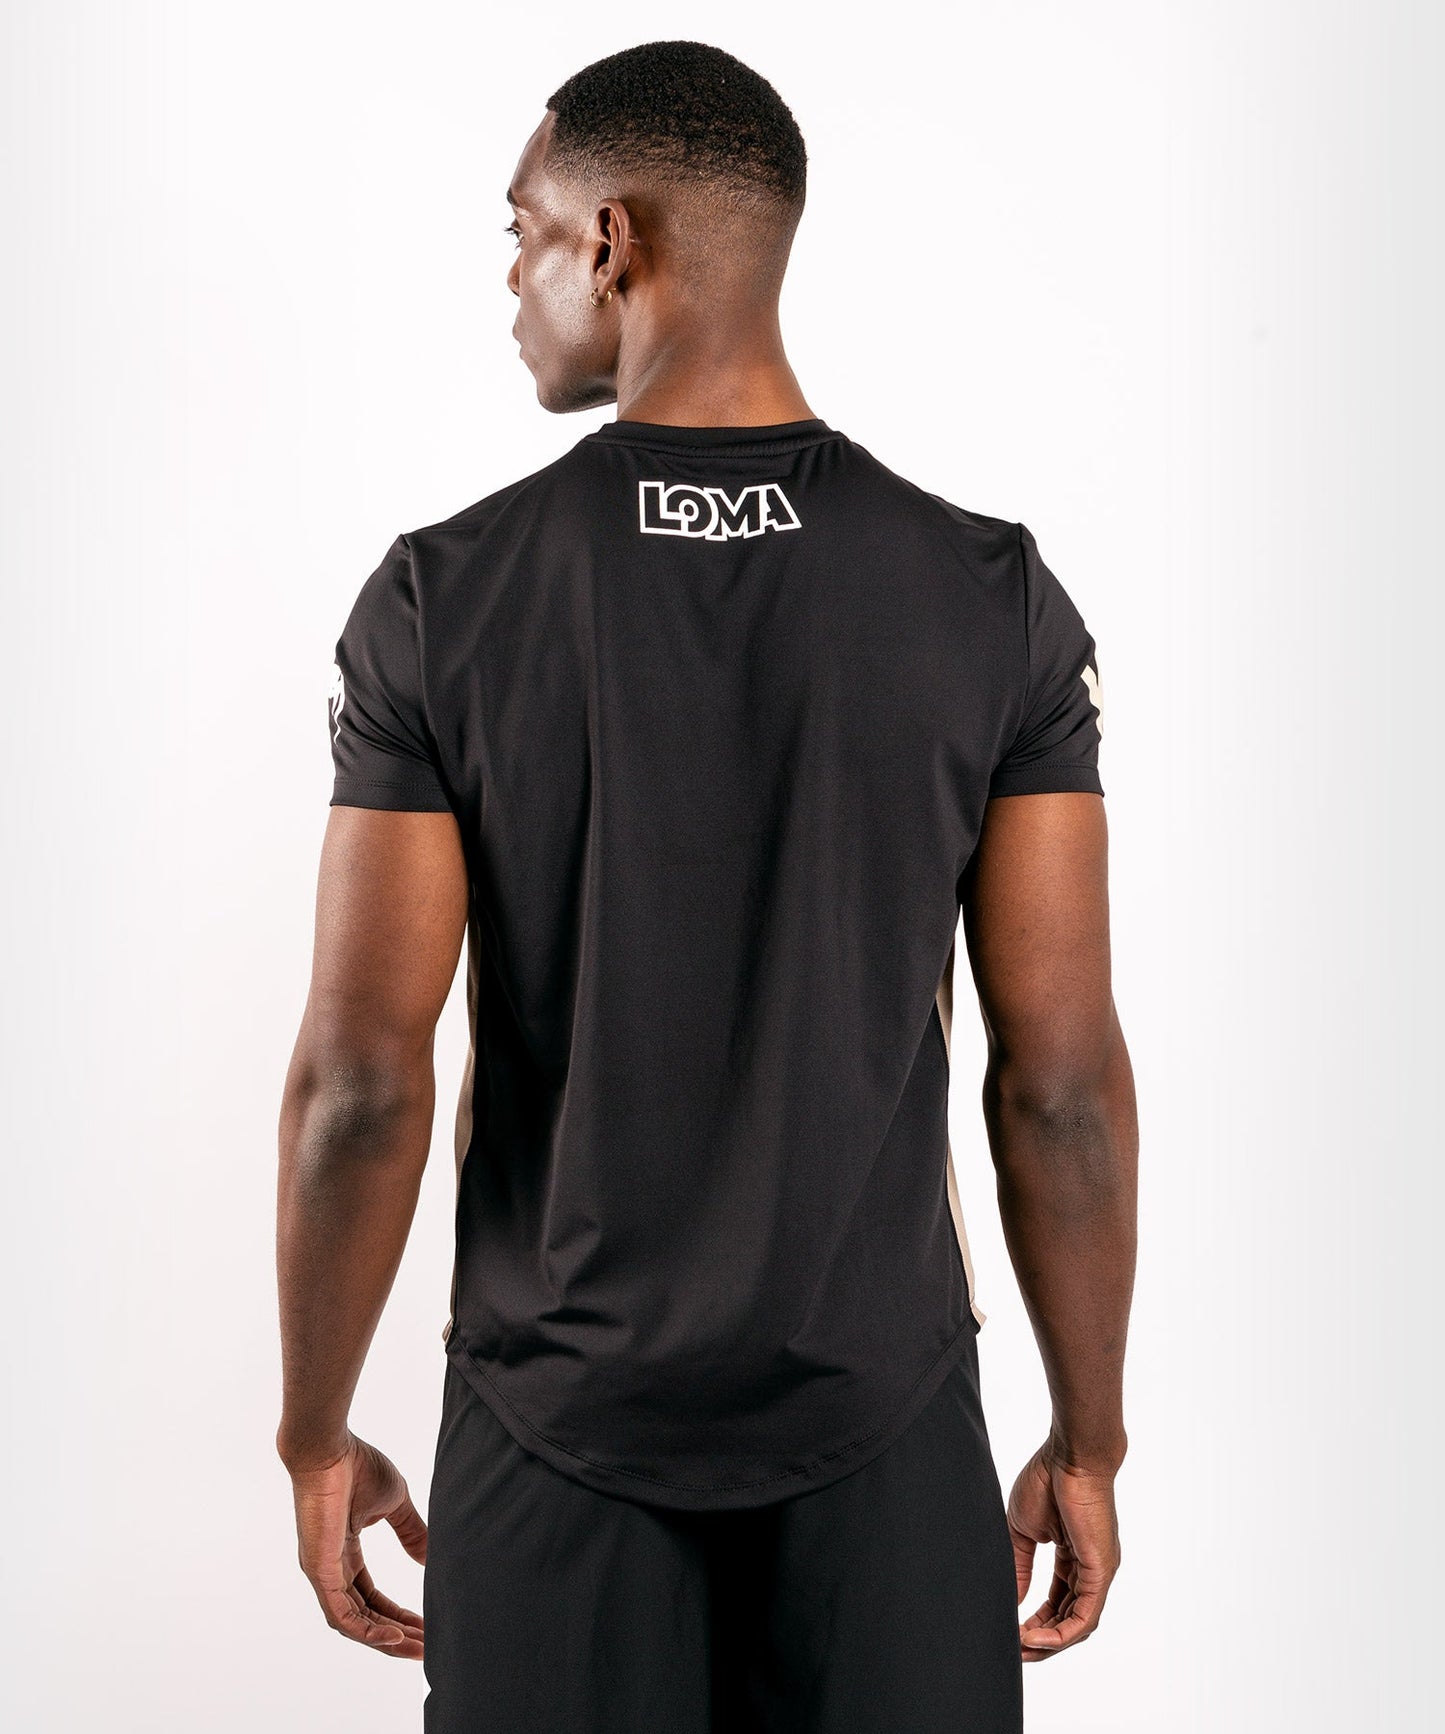 Venum Origins Dry Tech T-shirt - Black/White